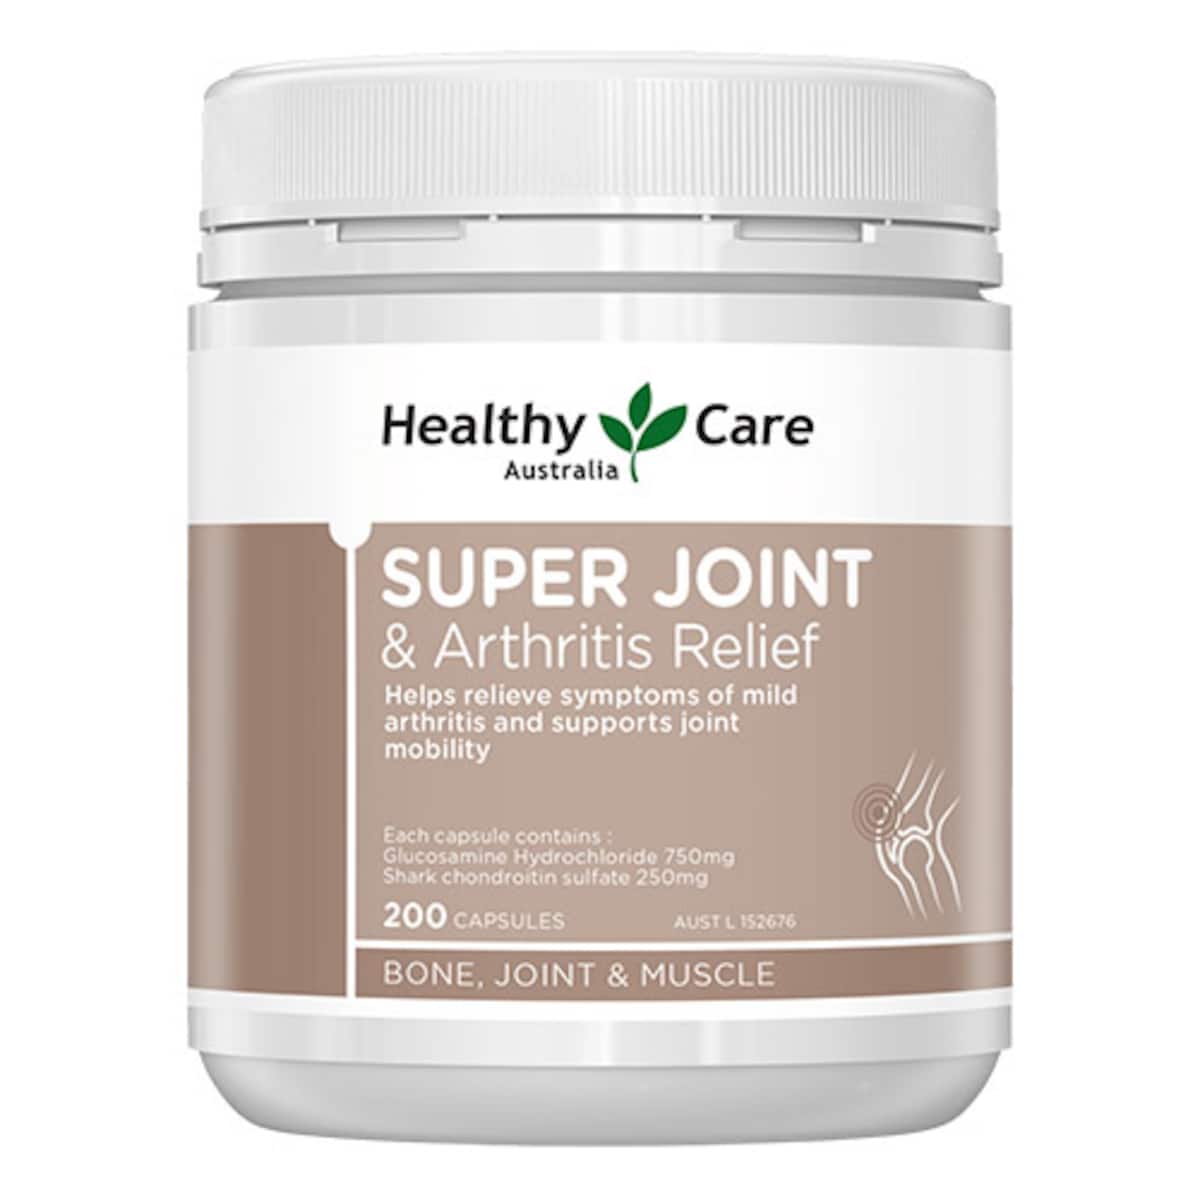 Healthy Care Super Joint & Arthritis Relief 200 Capsules Australia